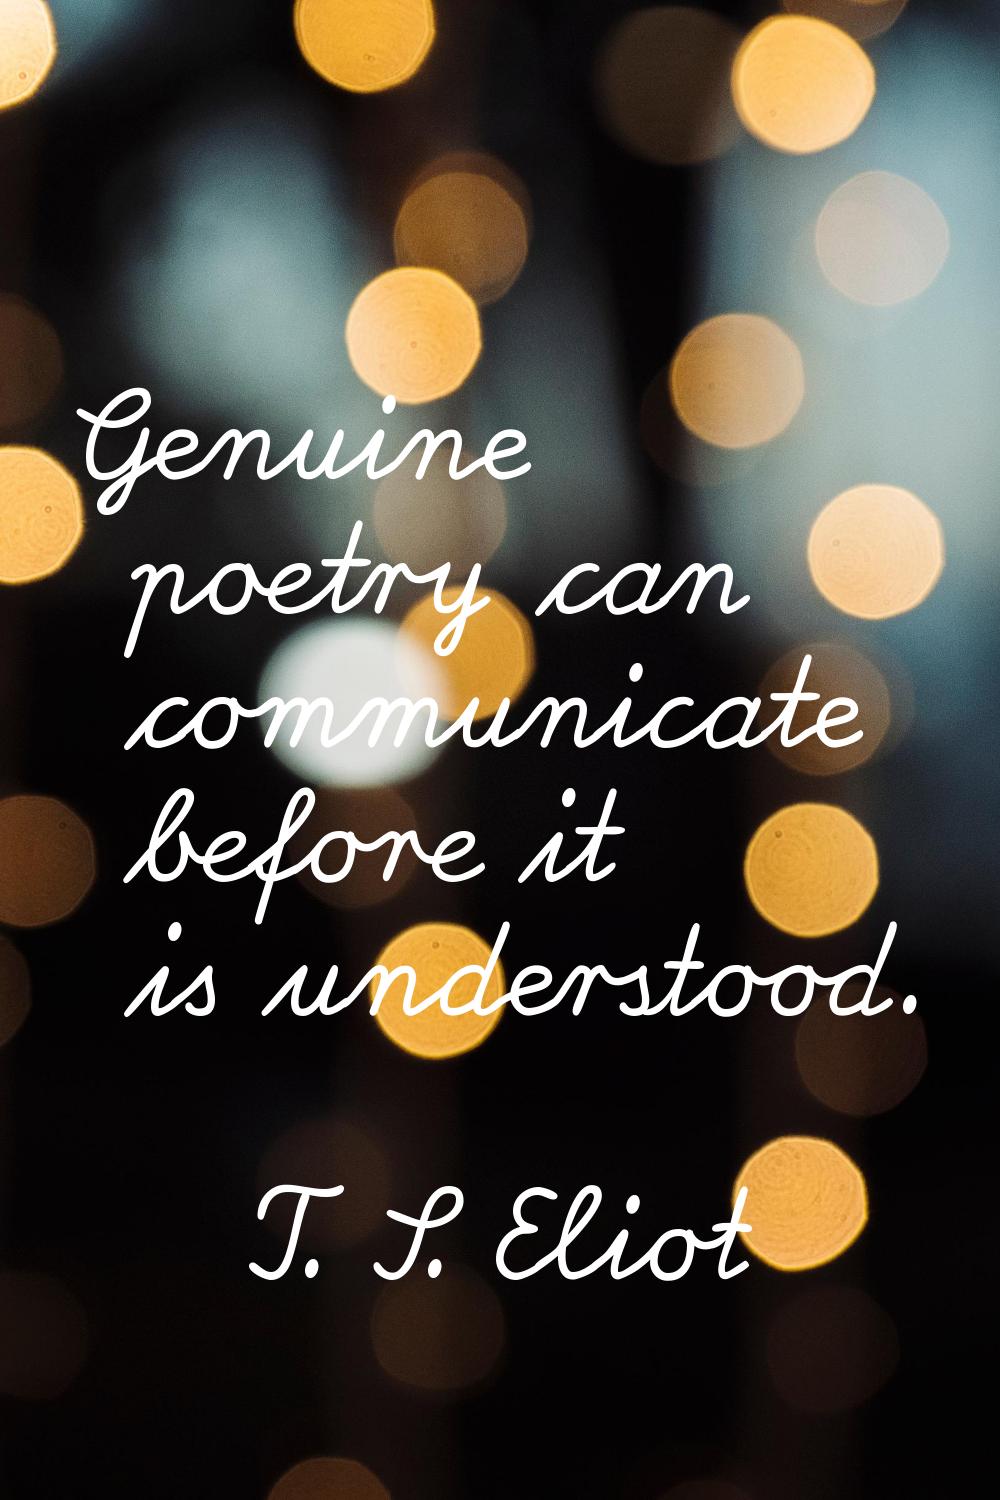 Genuine poetry can communicate before it is understood.